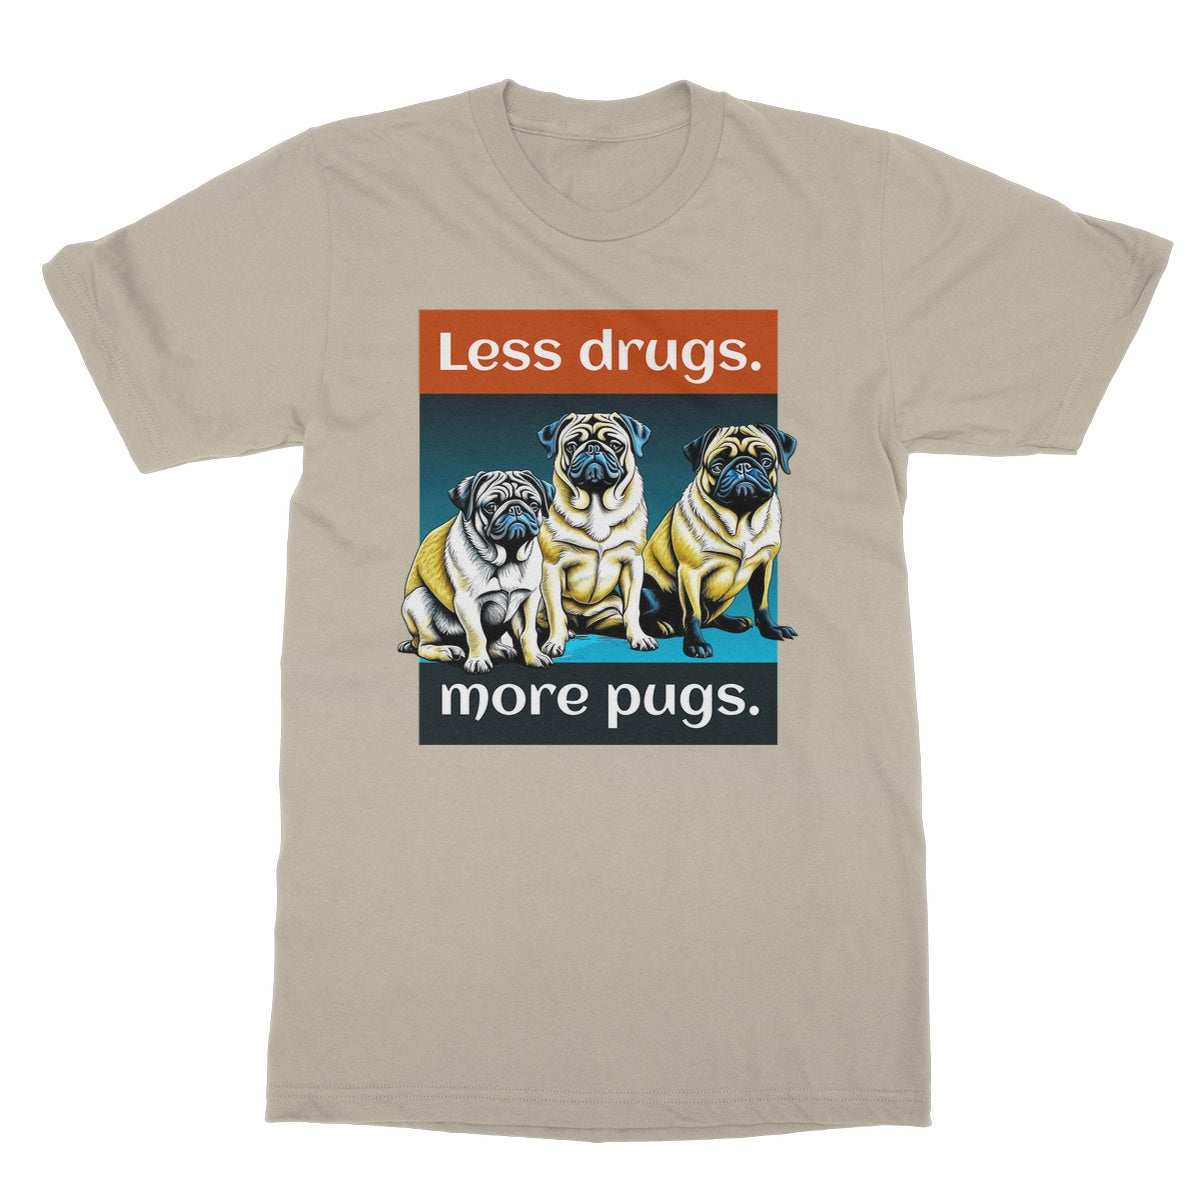 less drugs more pugs t shirt sand